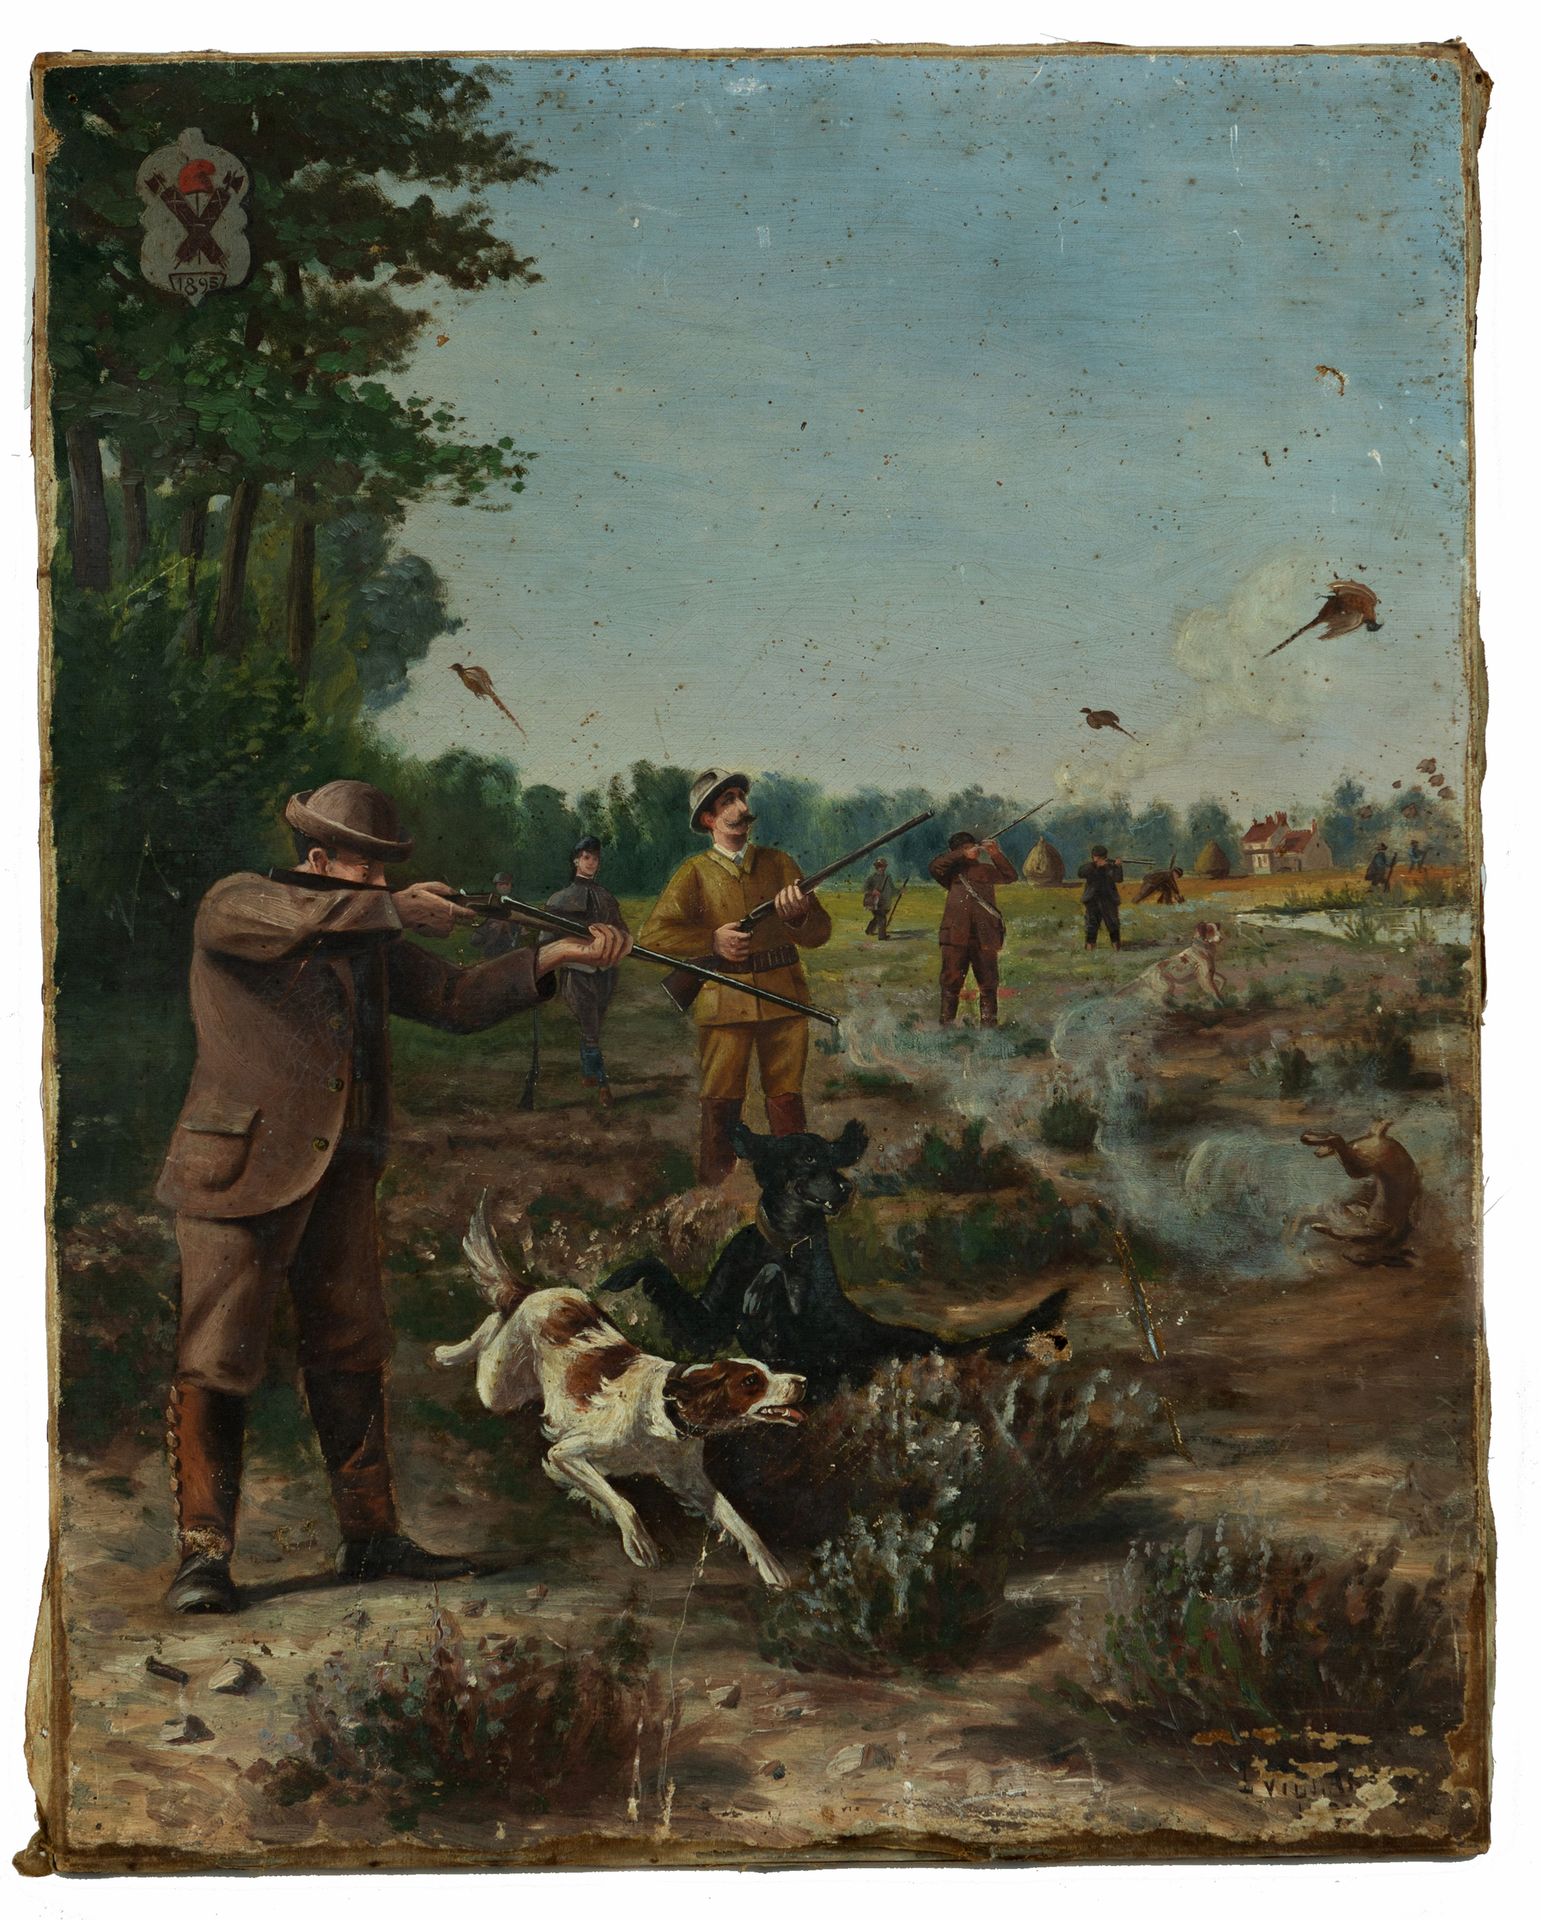 Null 19世纪末的法国学校

狩猎场景

布面油画，右下角署名E.VILLA...，日期为1895年

在左上角，有一个纹章，上面有两个骑士的横梁，上面有一&hellip;